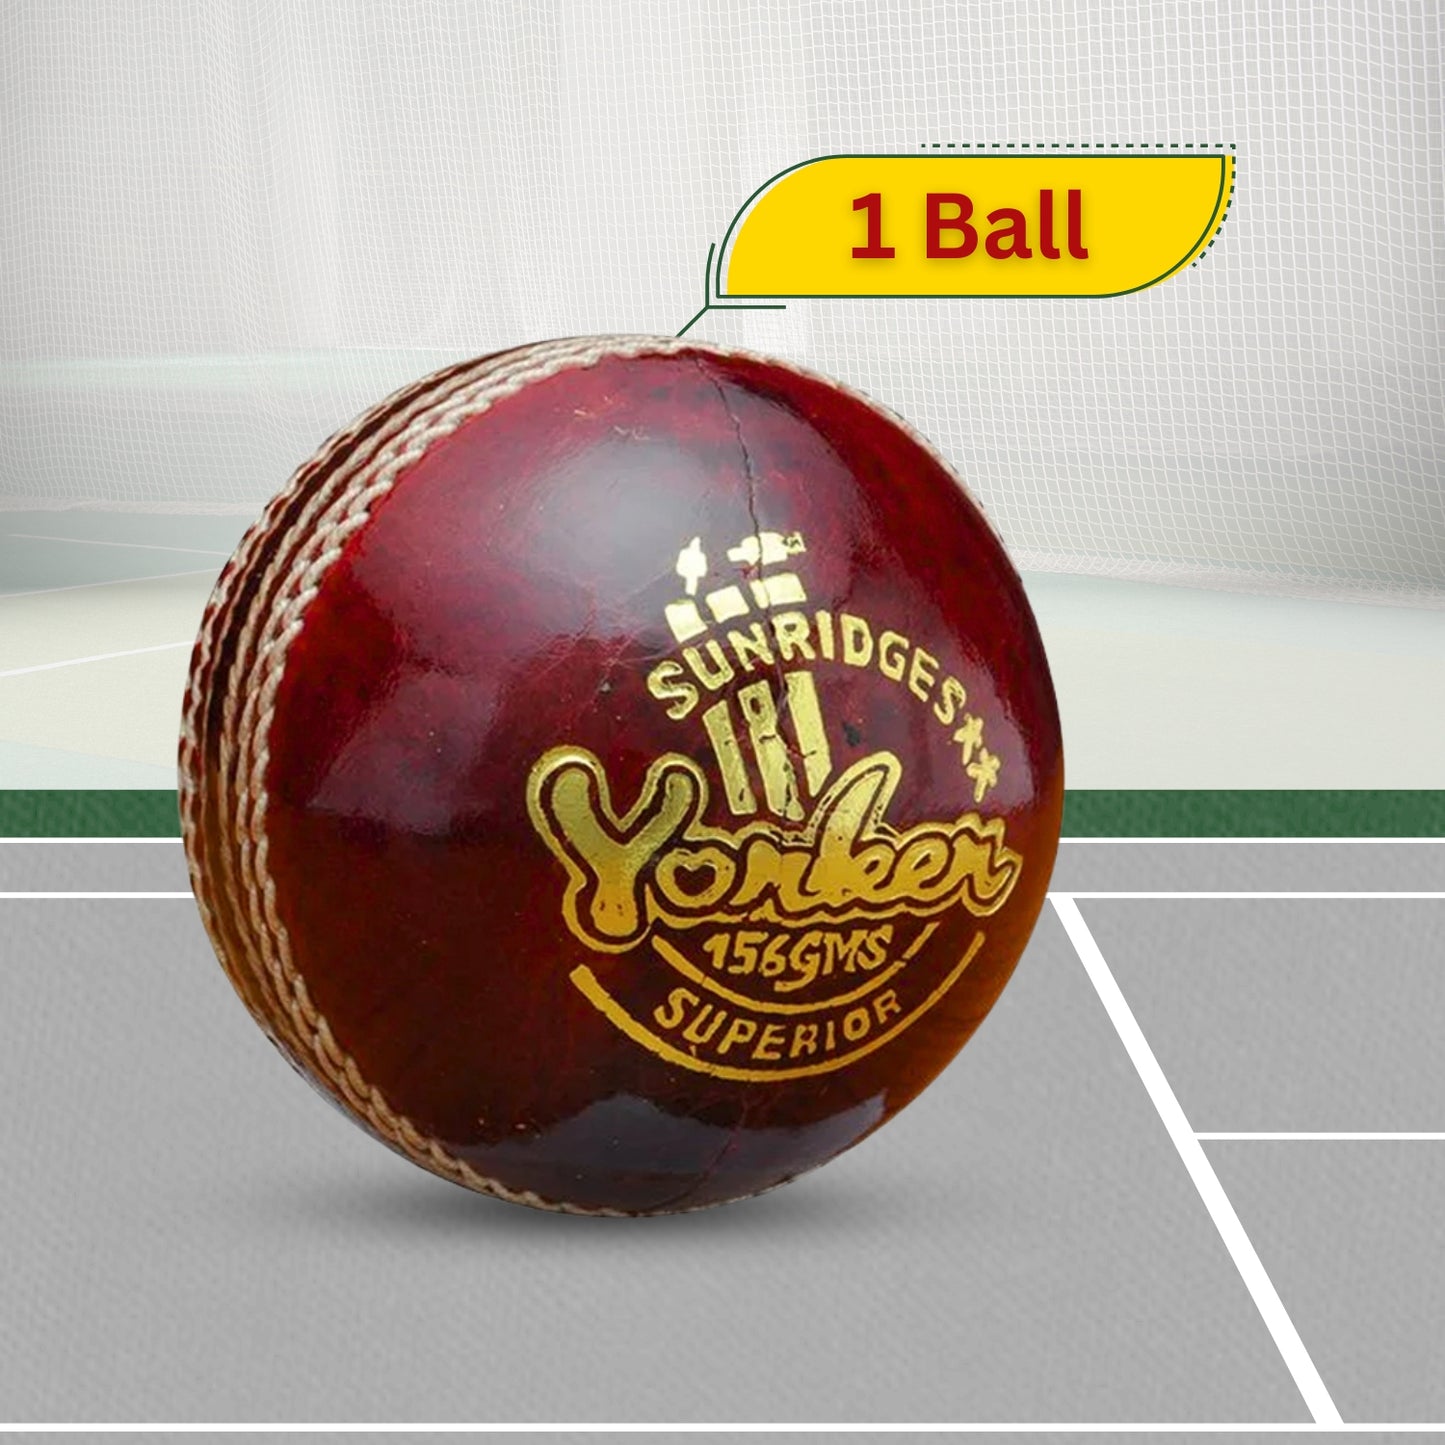 SS Yorker Cricket Ball, Red - 1PC - Best Price online Prokicksports.com